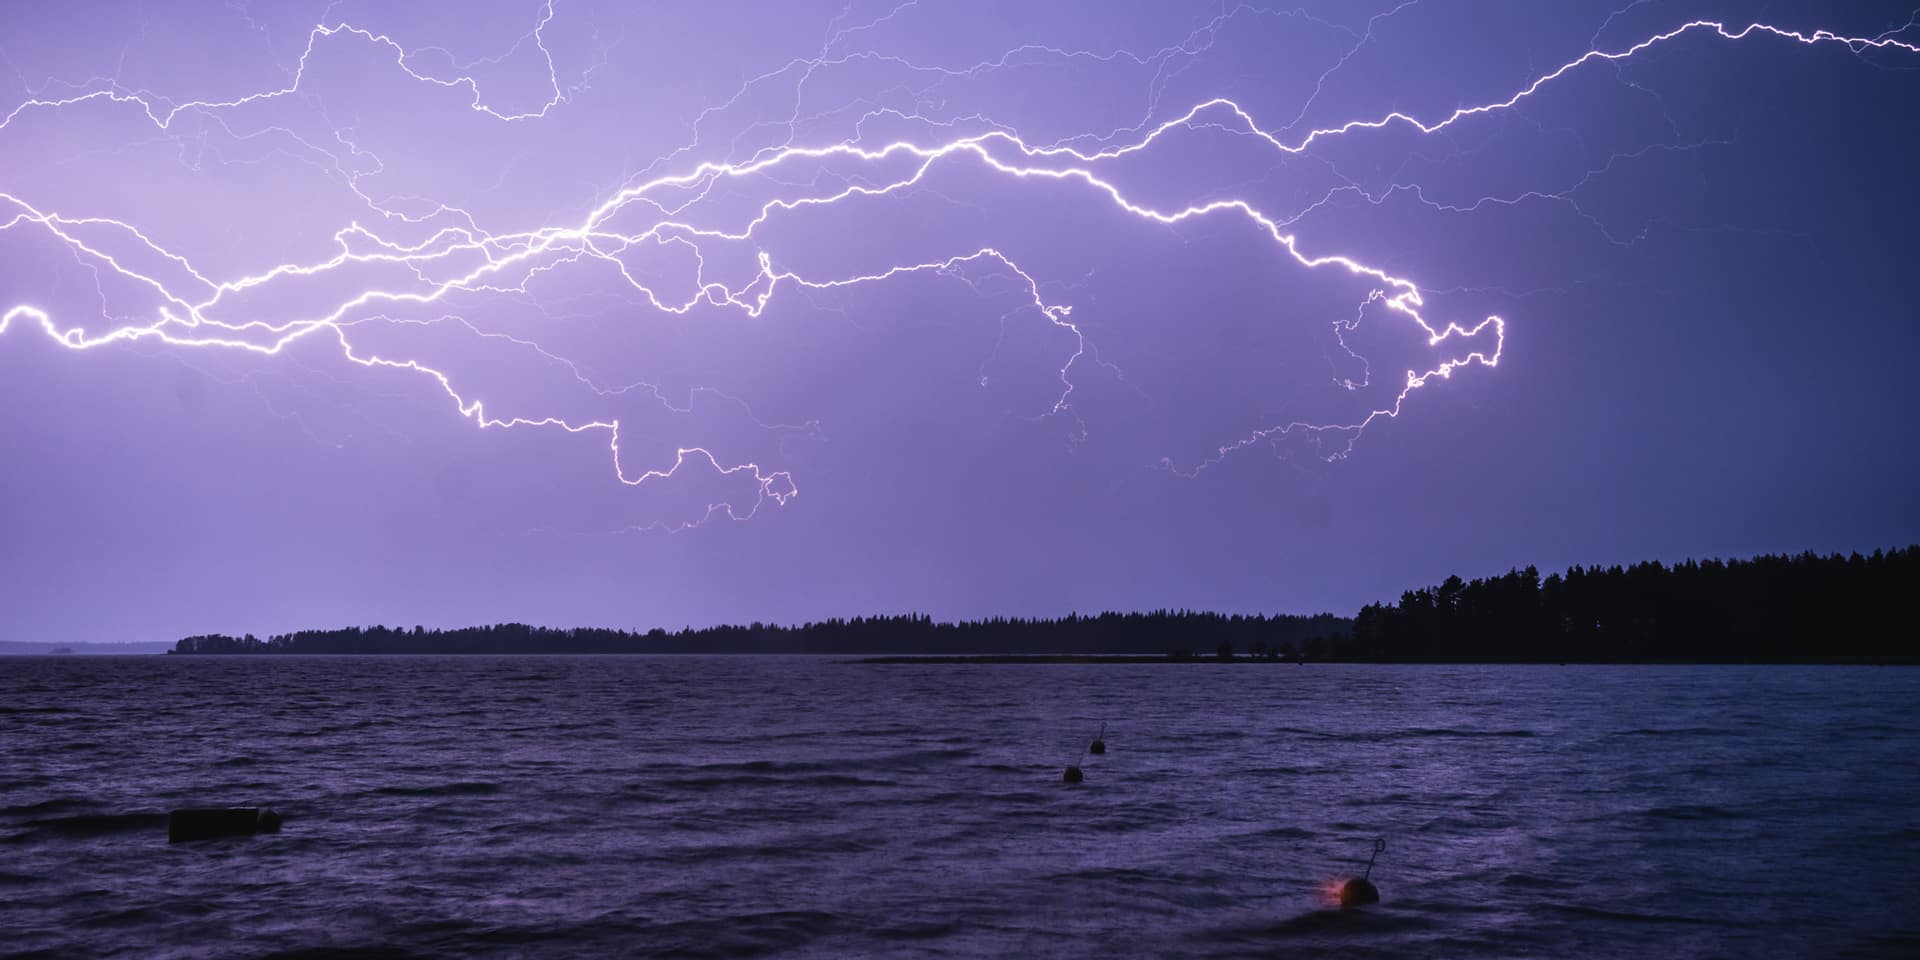 Lightning on a Boat | Safety Tips